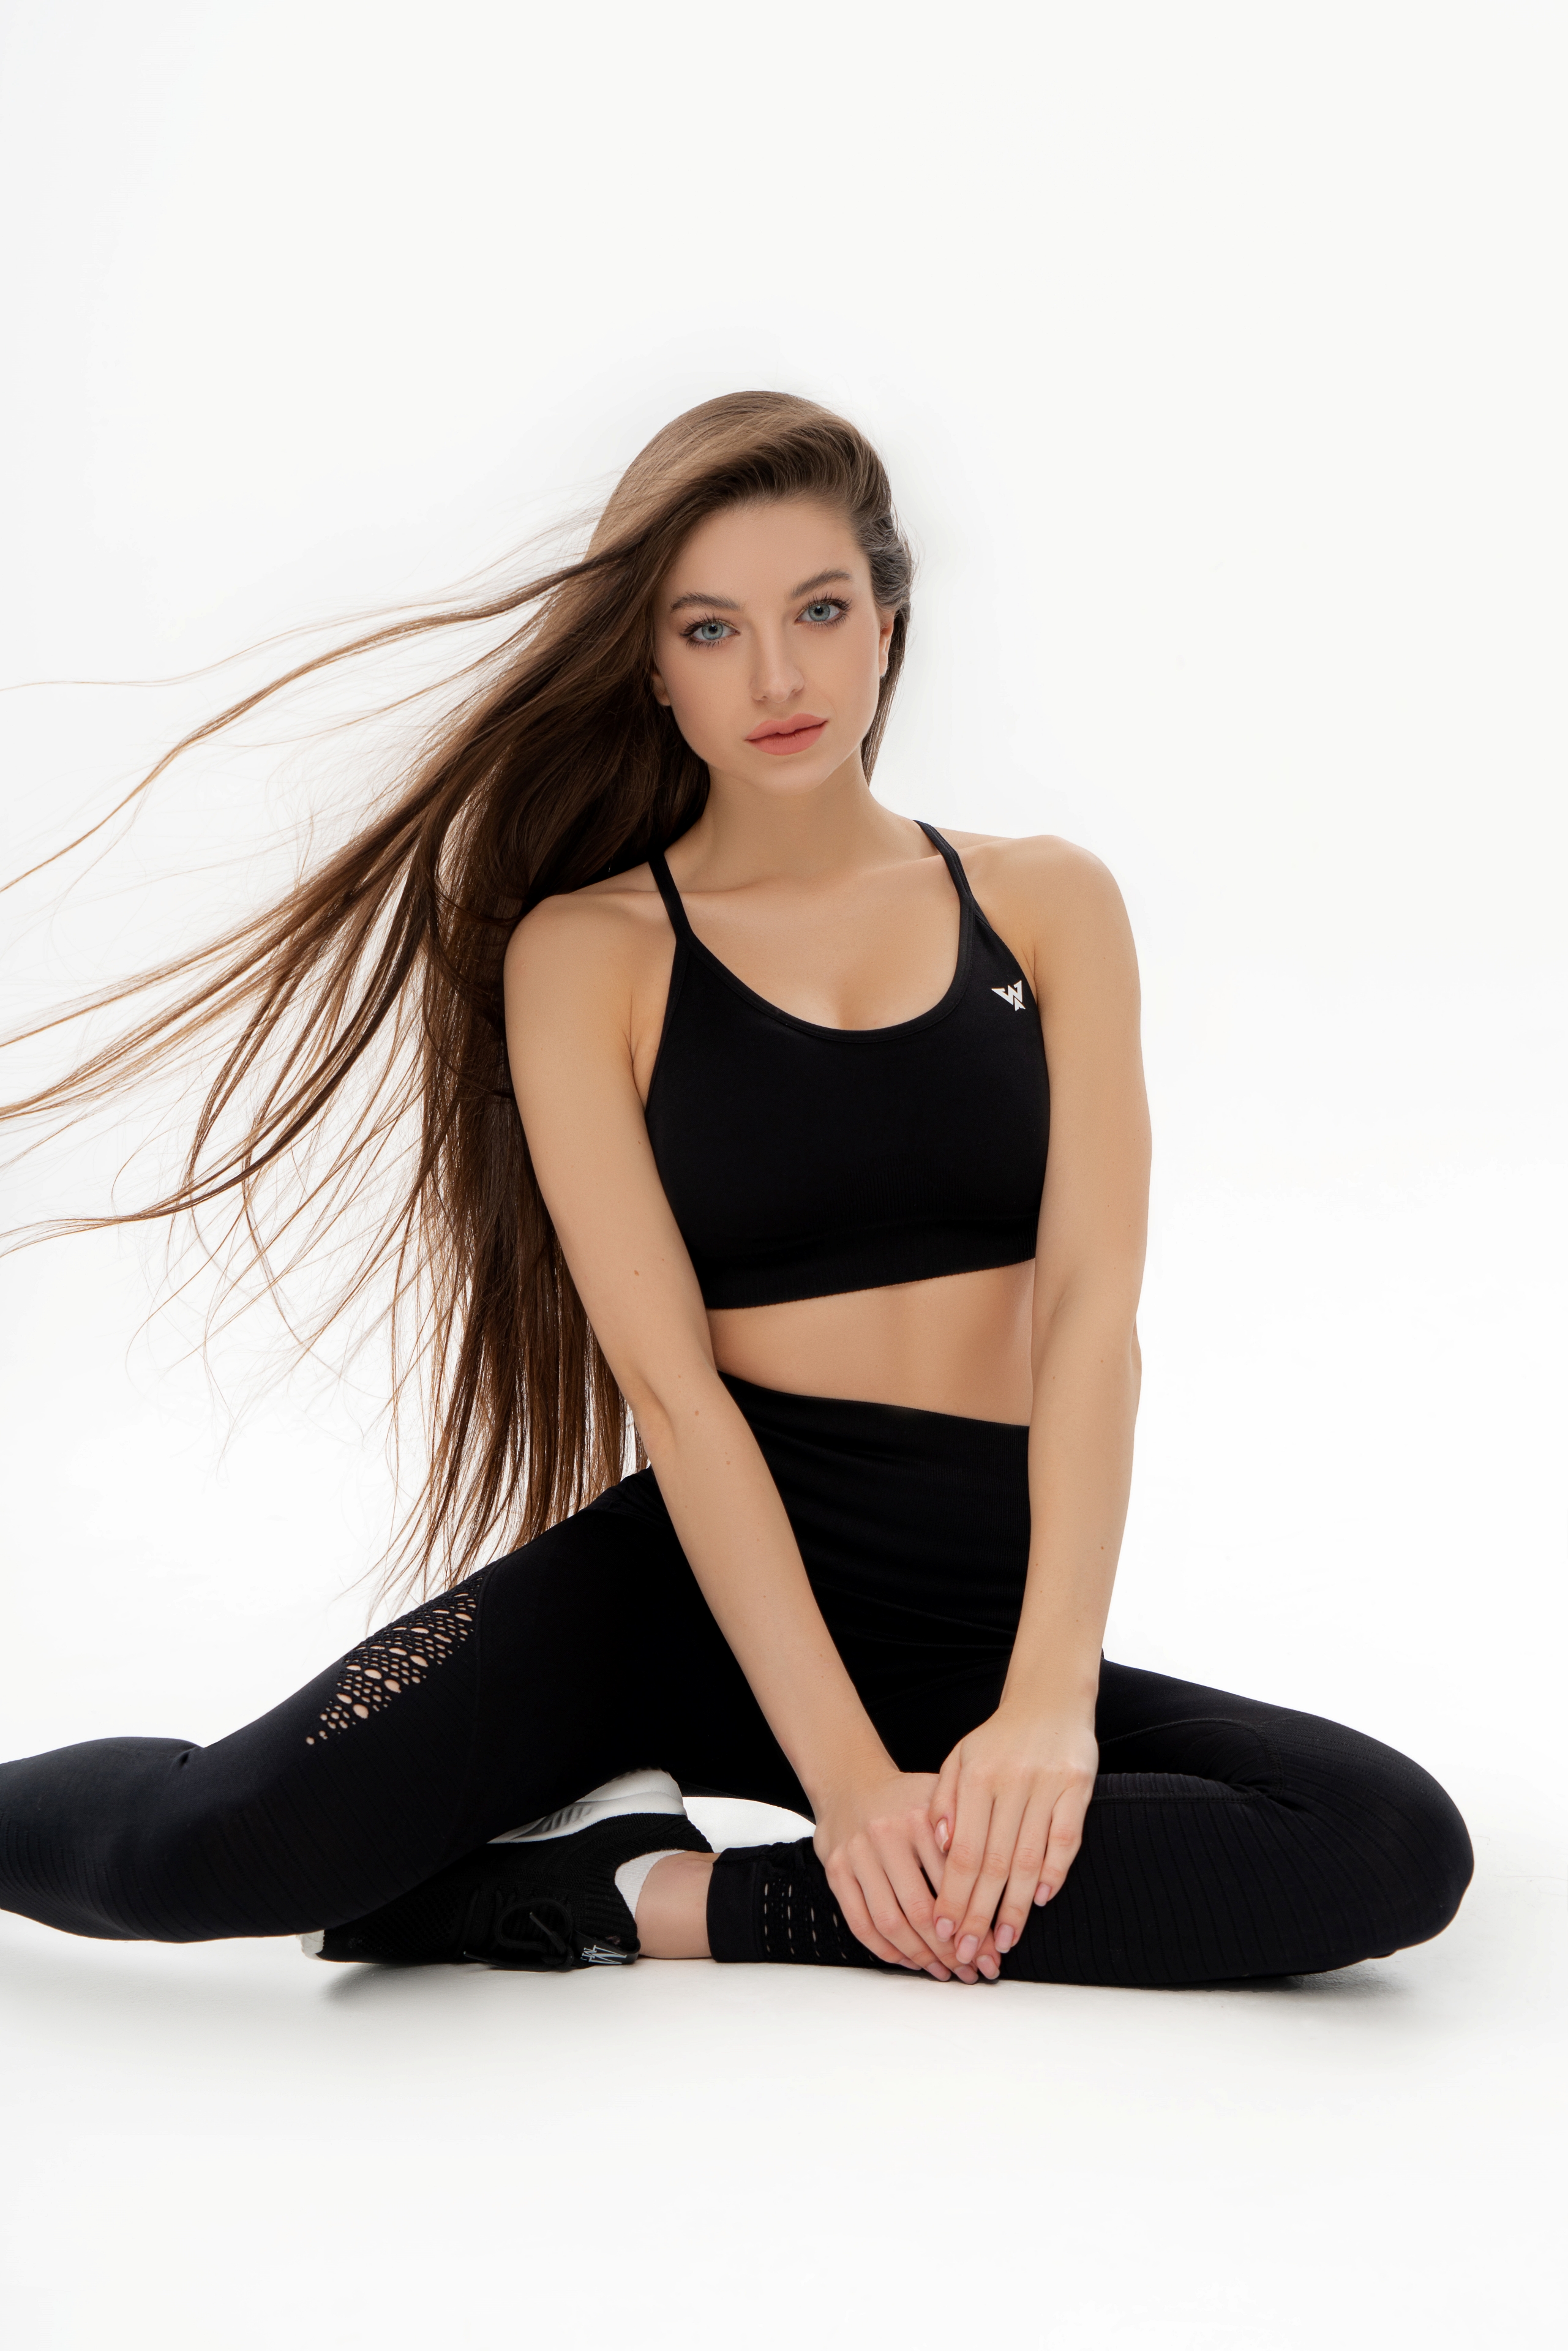 Anna Sazonova Women Model Brunette Long Hair Looking At Viewer Gray Eyes Black Clothing Sportswear B 2561x3840